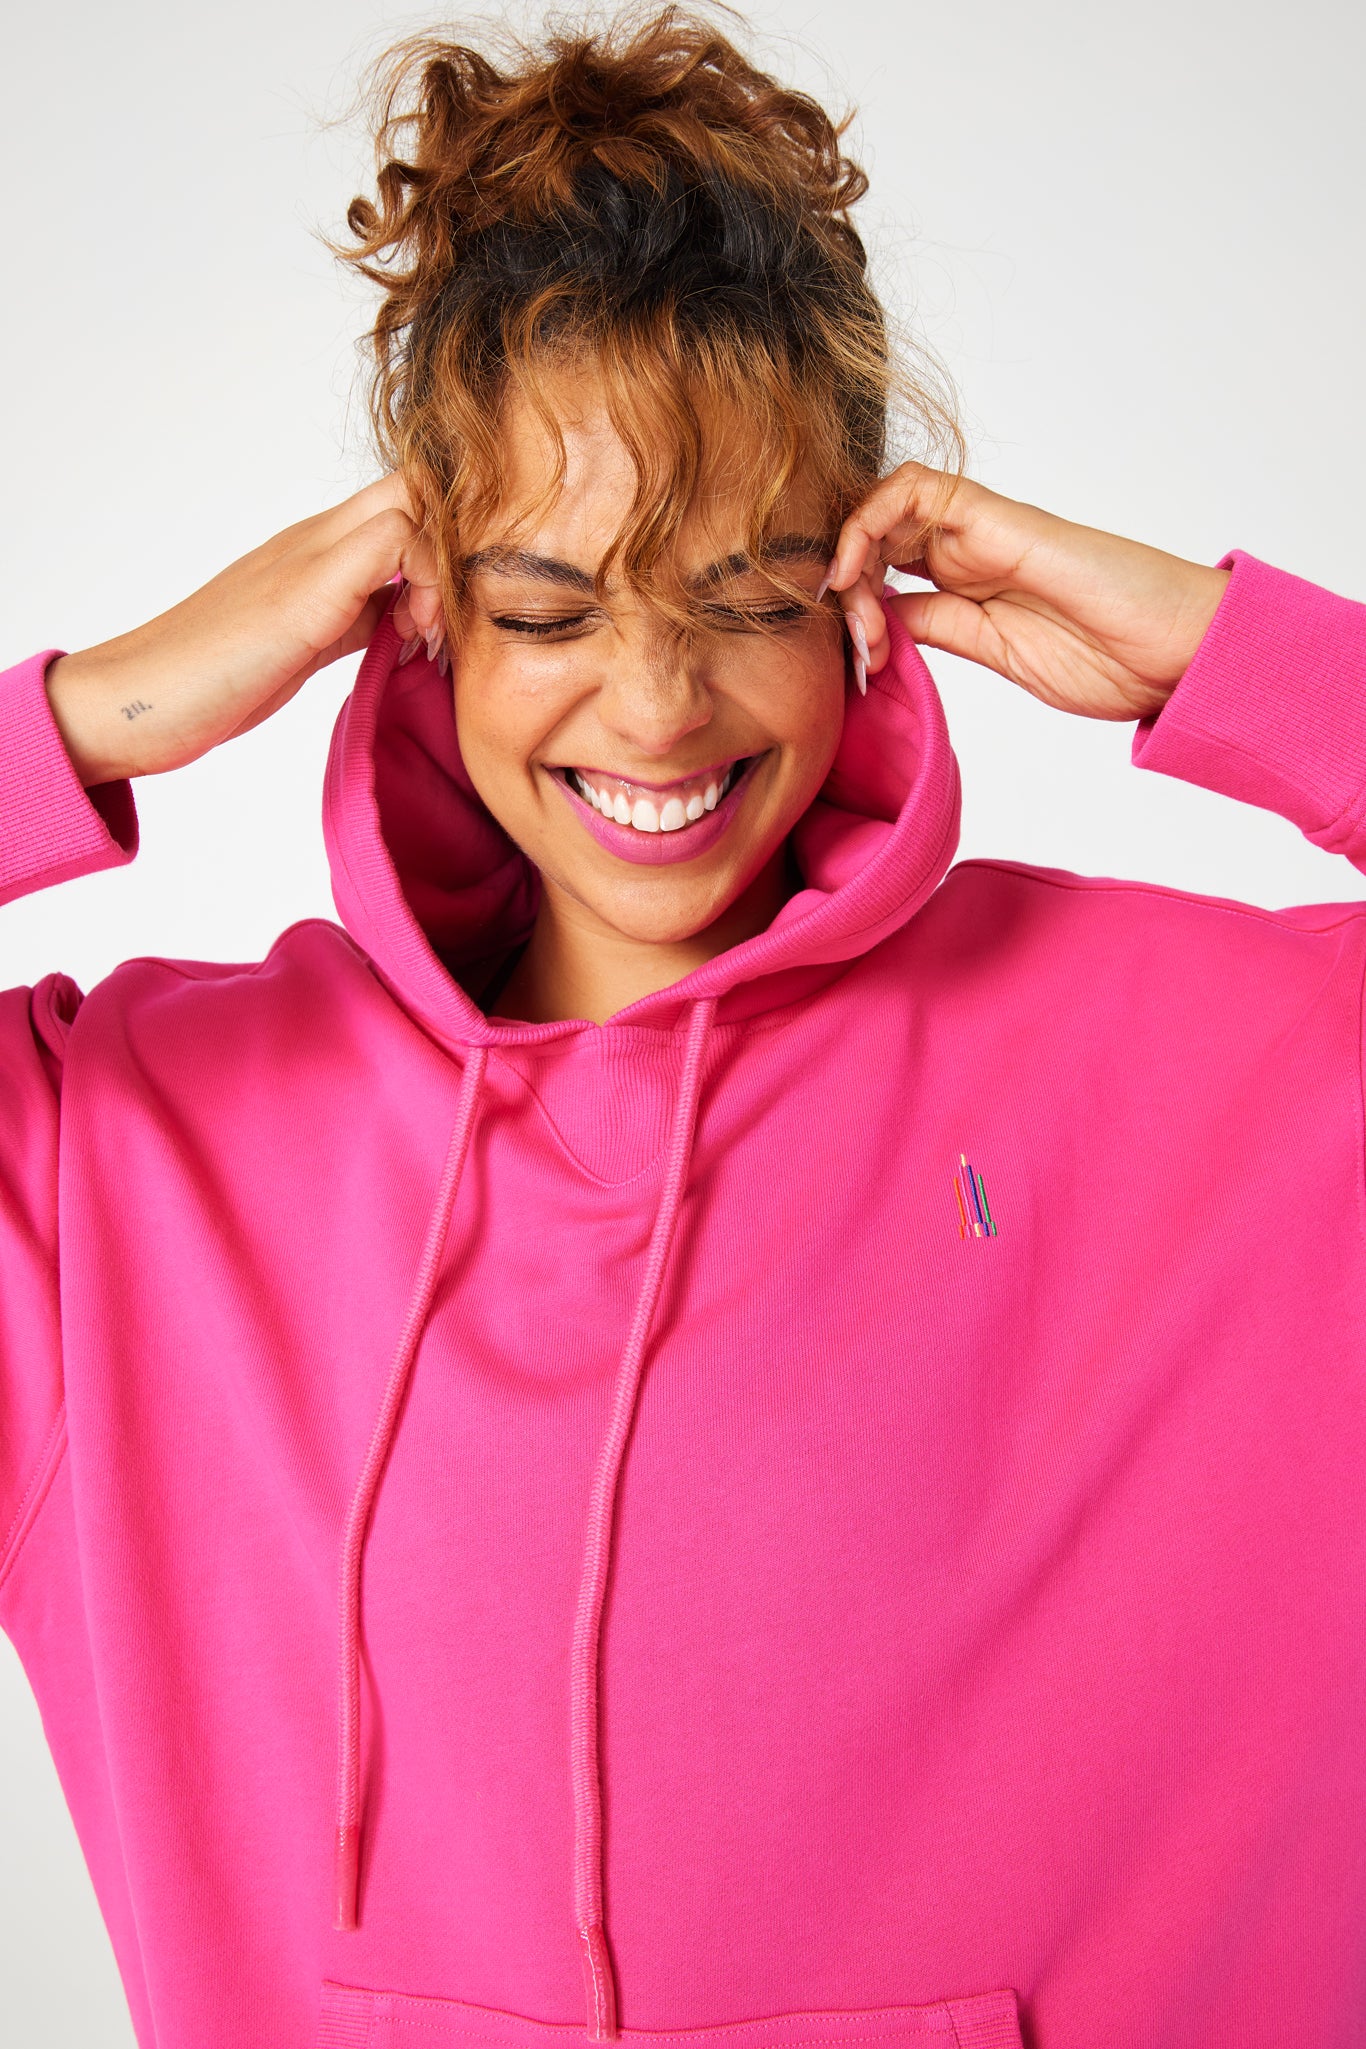 Sexy Dance Womens Tops Long Sleeve Pullover Crew Neck Sweatshirt Fashion  Tee Graphics Printed Shirt Pink XL